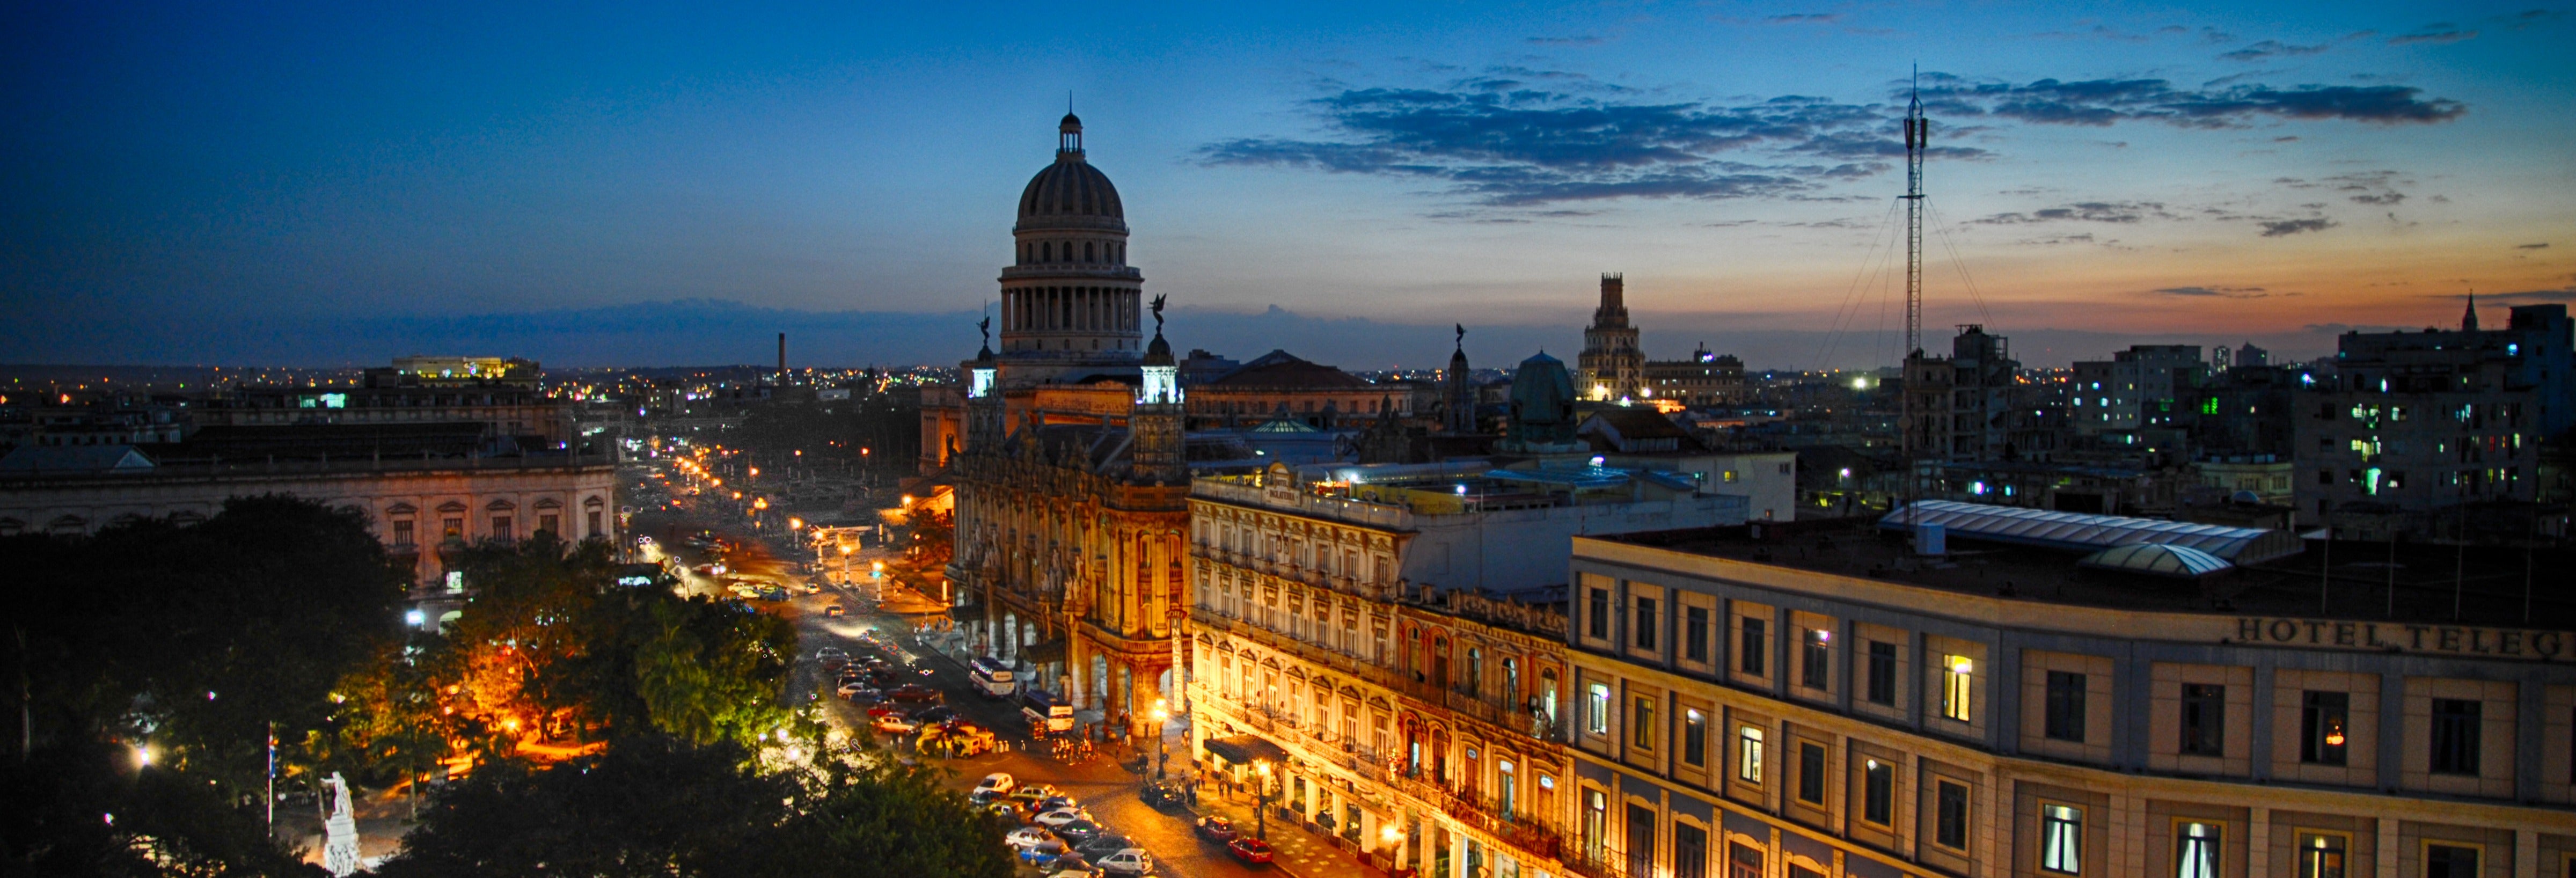 Free tour noturno por Havana